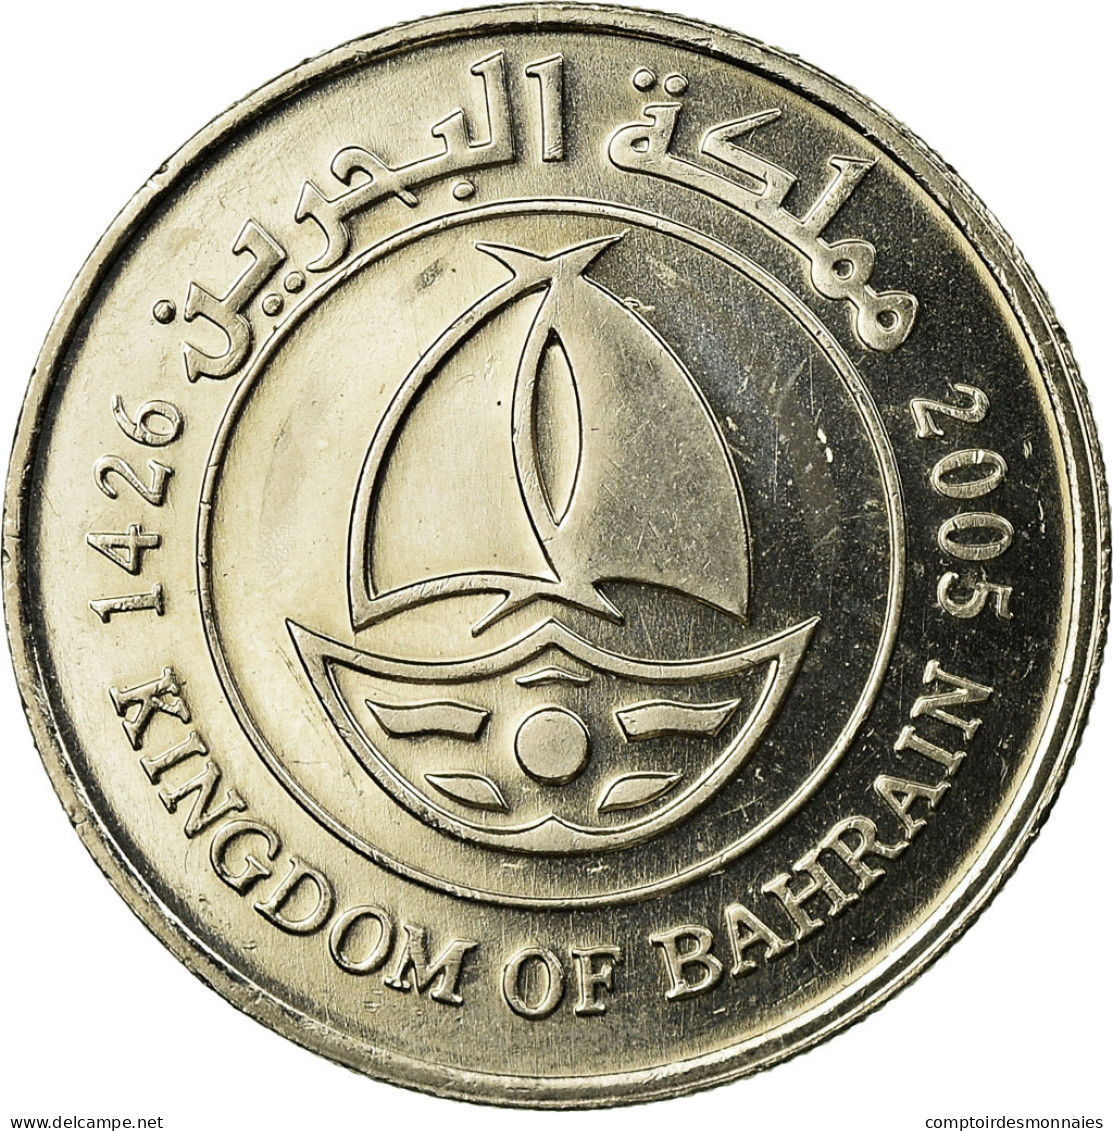 Monnaie, Bahrain, Hamed Bin Isa, 50 Fils, 2005, SUP, Copper-nickel, KM:25 - Bahrain